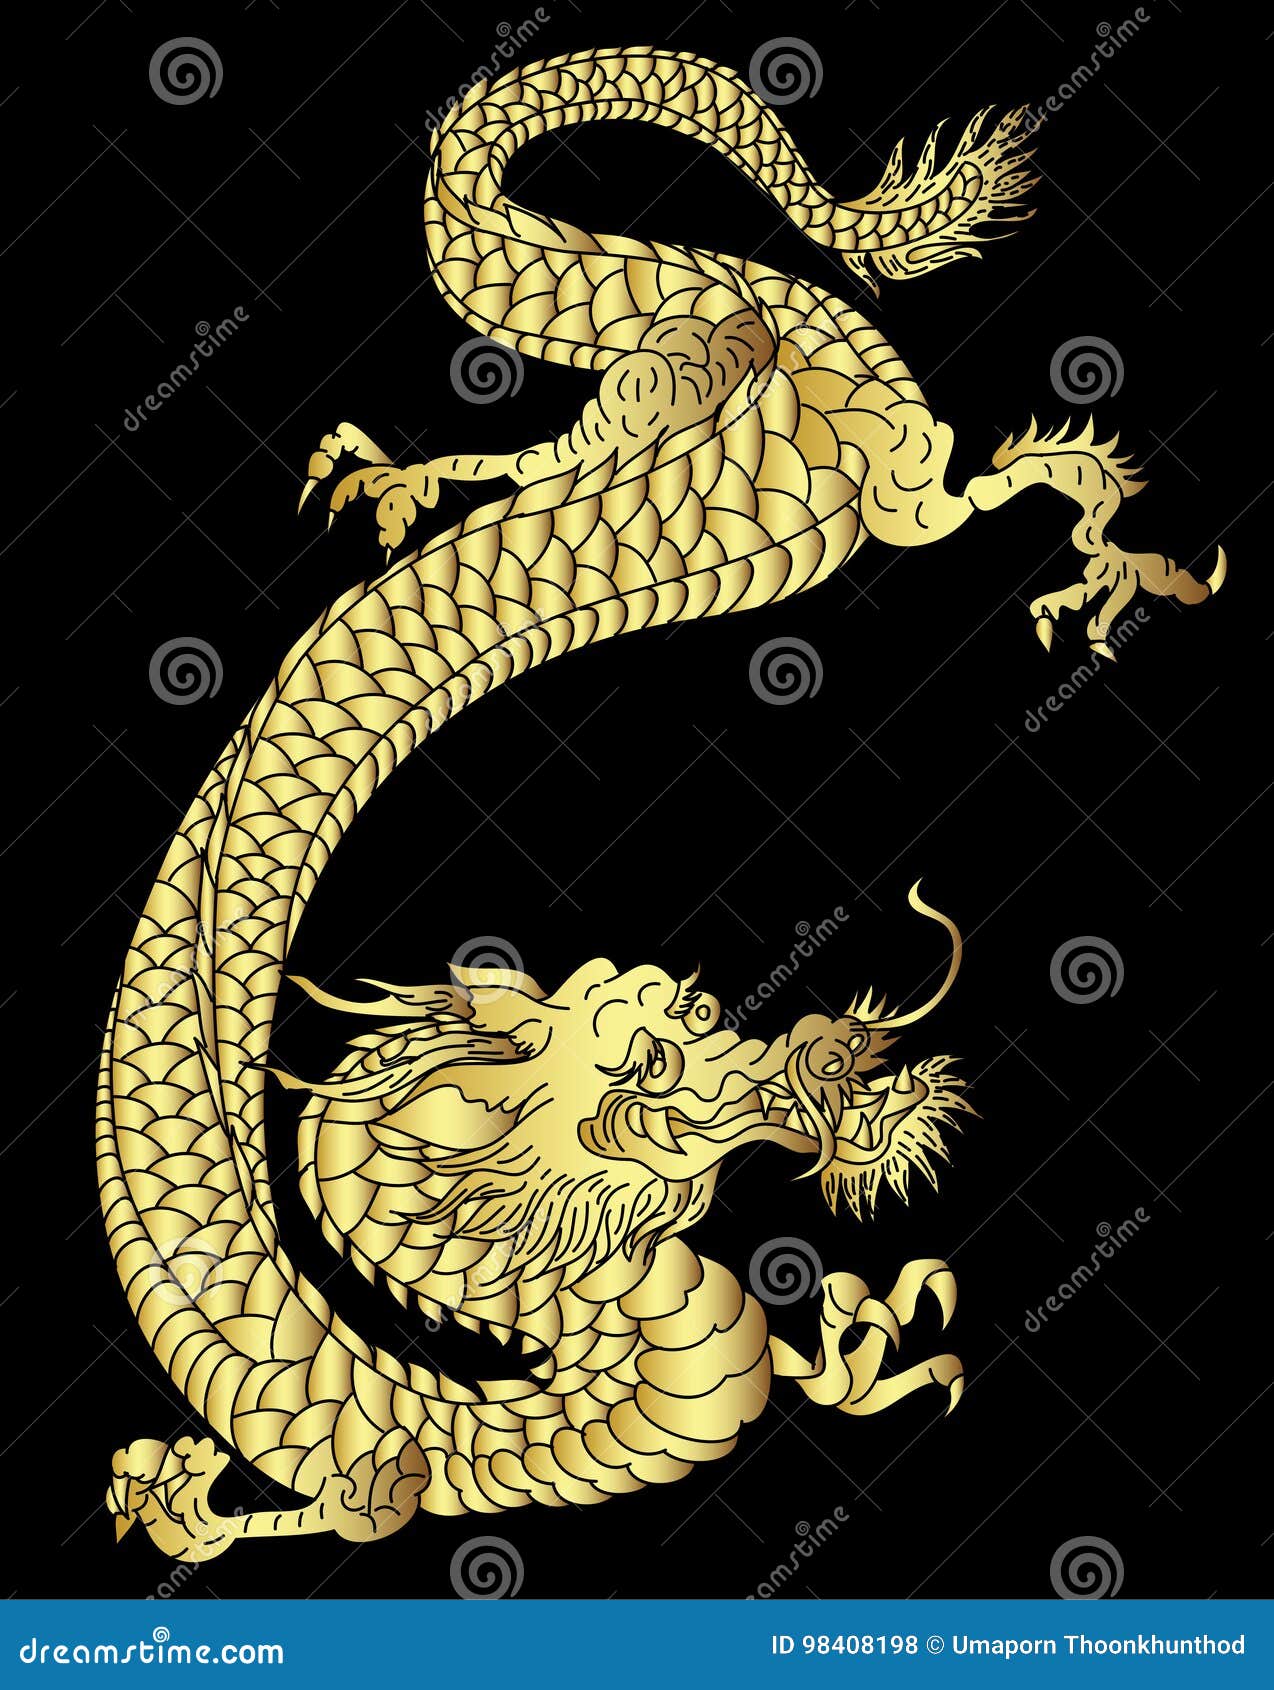 500 Golden Dragon Tattoo Background Illustrations RoyaltyFree Vector  Graphics  Clip Art  iStock